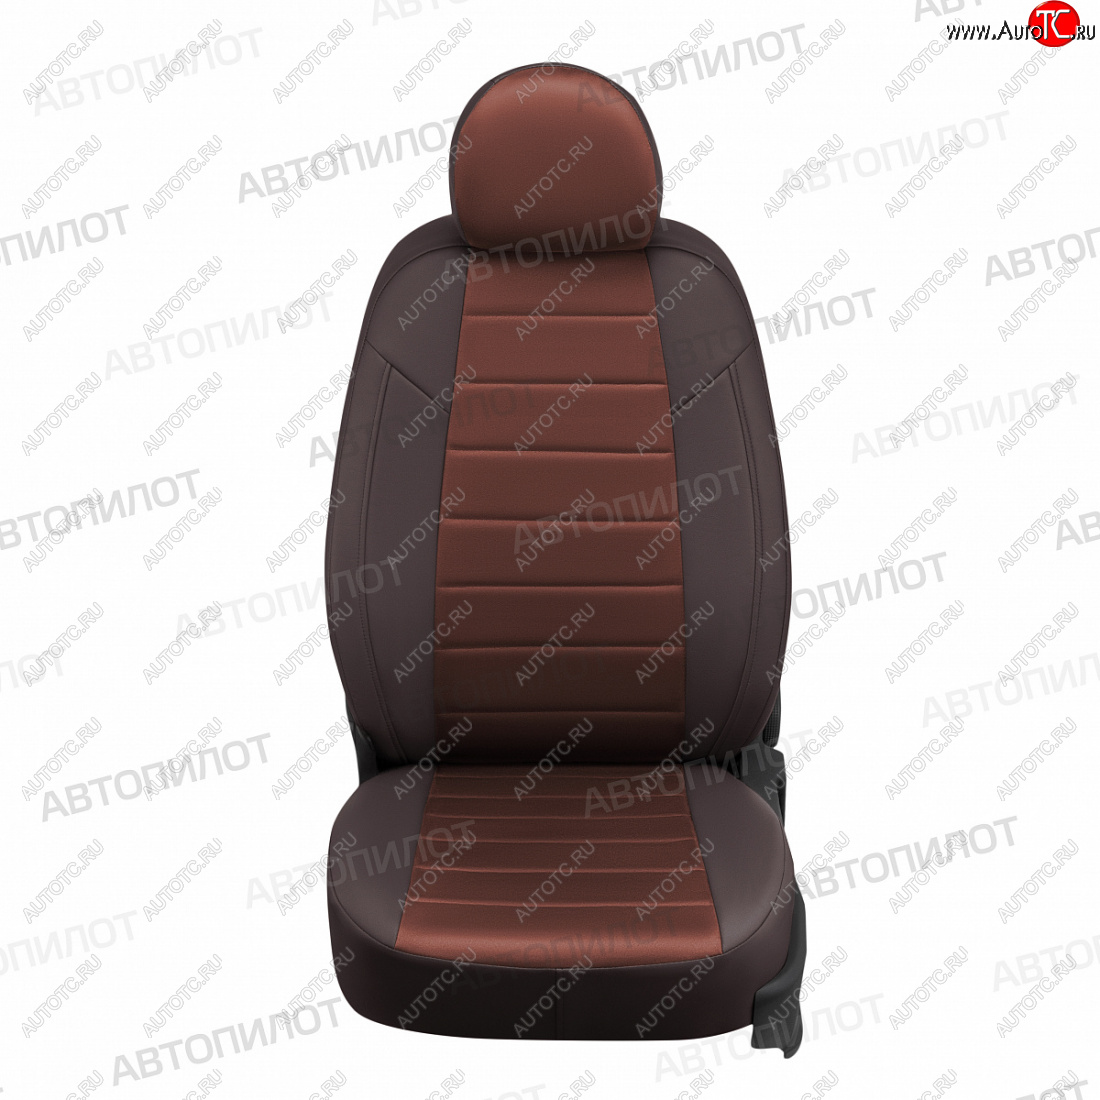 13 449 р. Чехлы сидений (экокожа/алькантара) Автопилот  KIA Picanto  1 SA хэтчбэк 5 дв. (2003-2011) (шоколад)